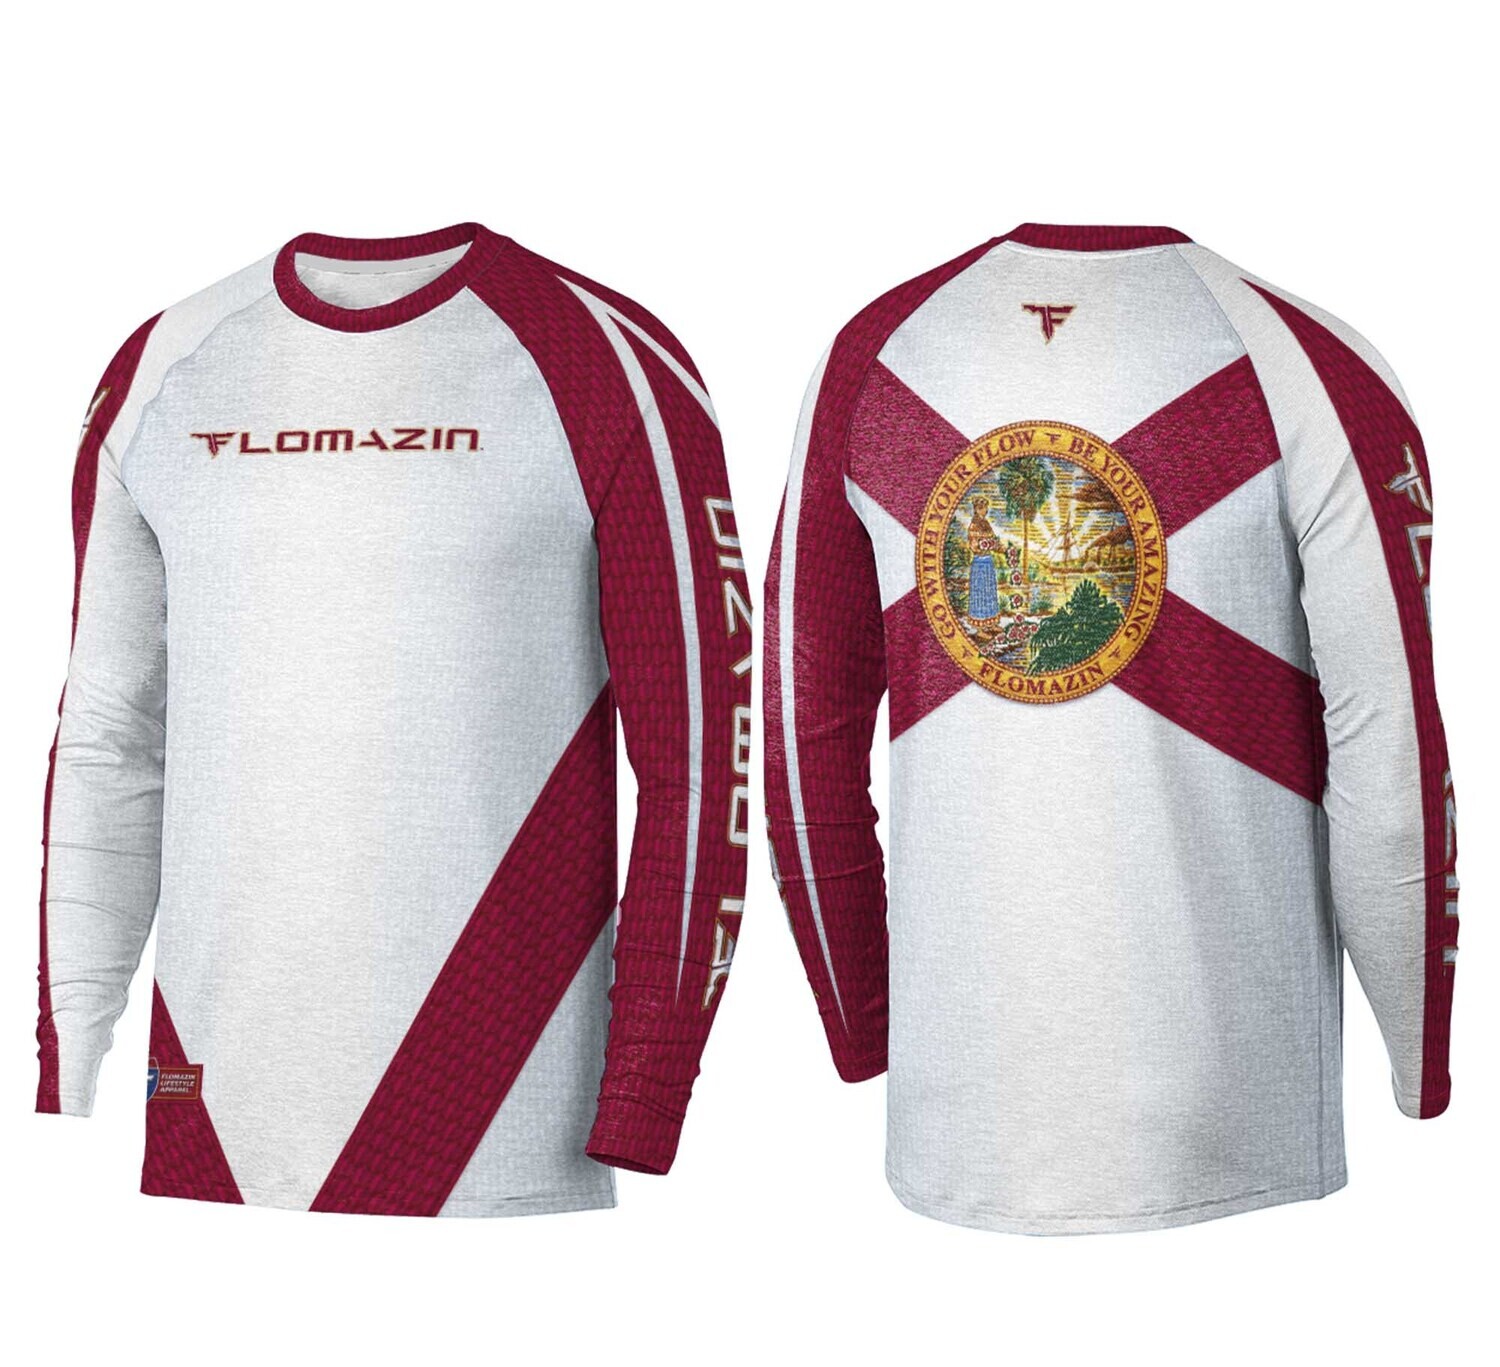 FLOMAZIN 1 Flag Seal Shark Skin Design Men's Quick Dry Fabric Long Sleeve Shirt